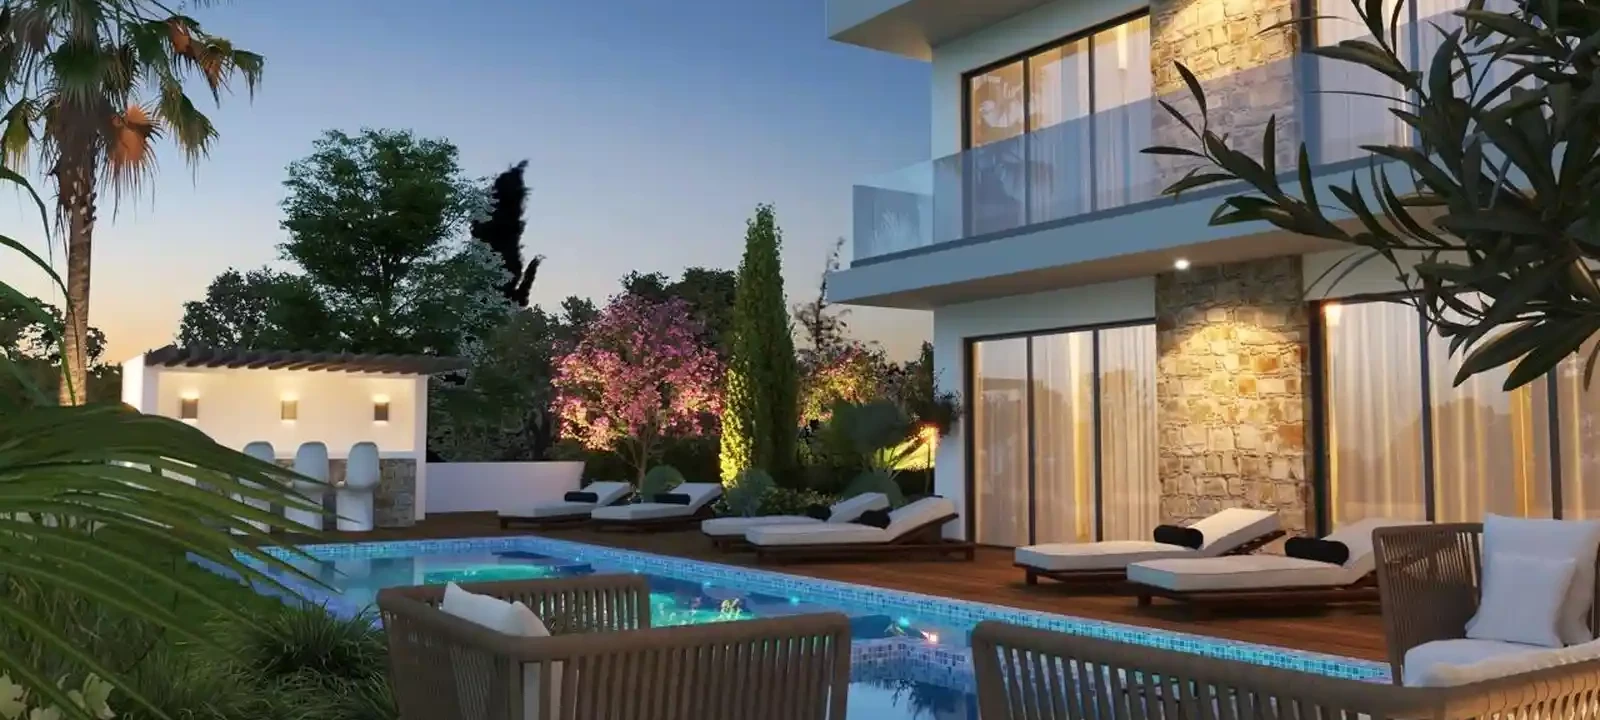 4-bedroom villa fоr sаle €870.000, image 1